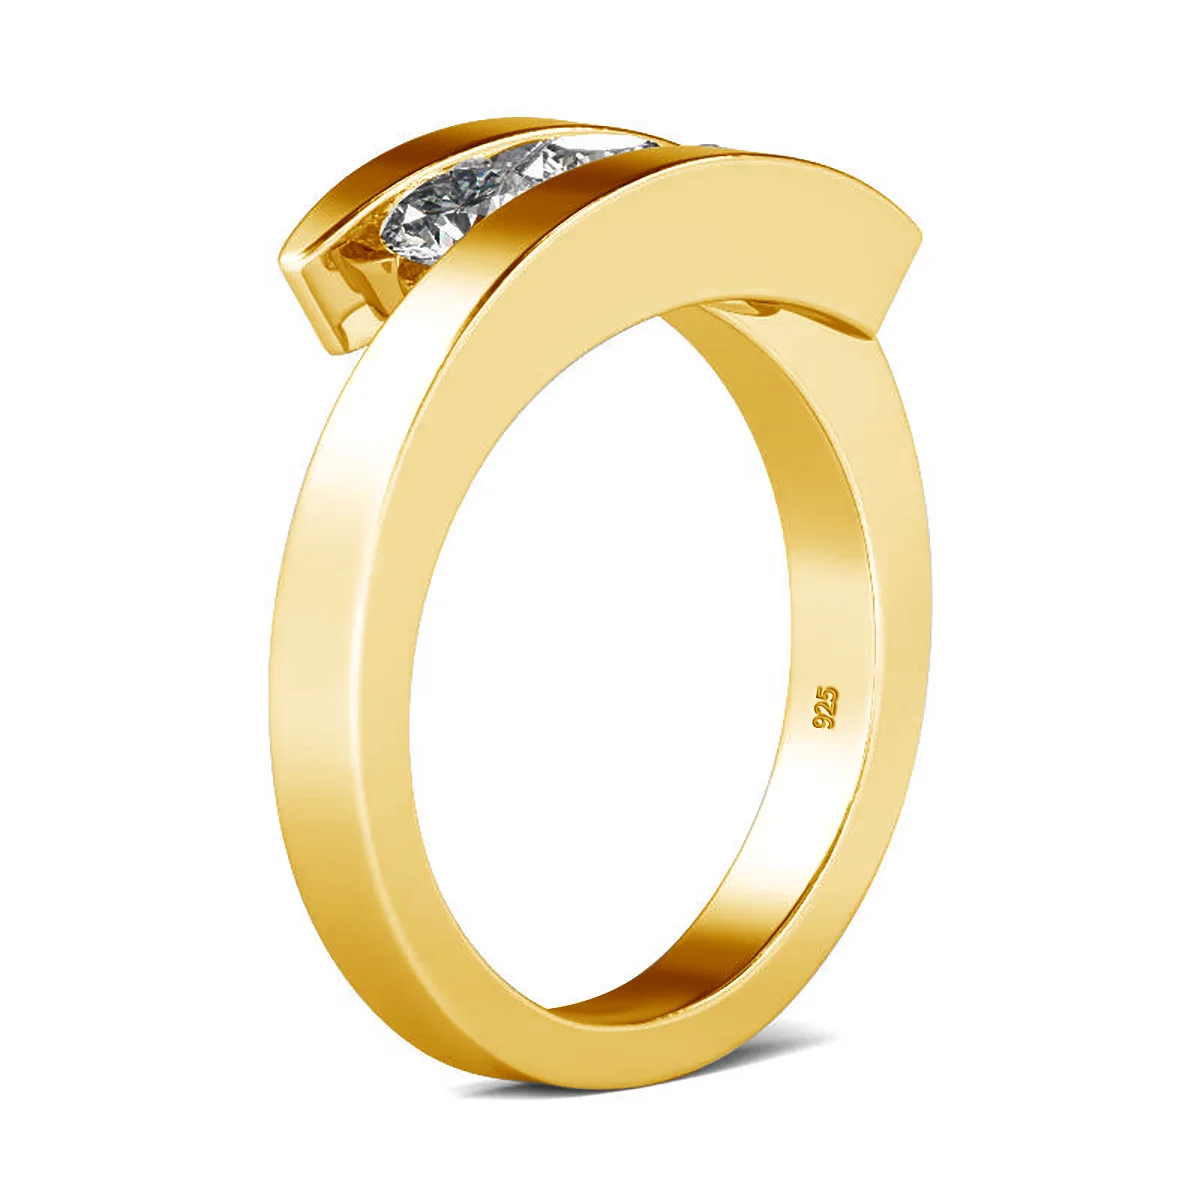 szjinao habilitado anel de pedra moissanite para noivado feminino prata esterlina pura luxo jóias tendência feminina presente